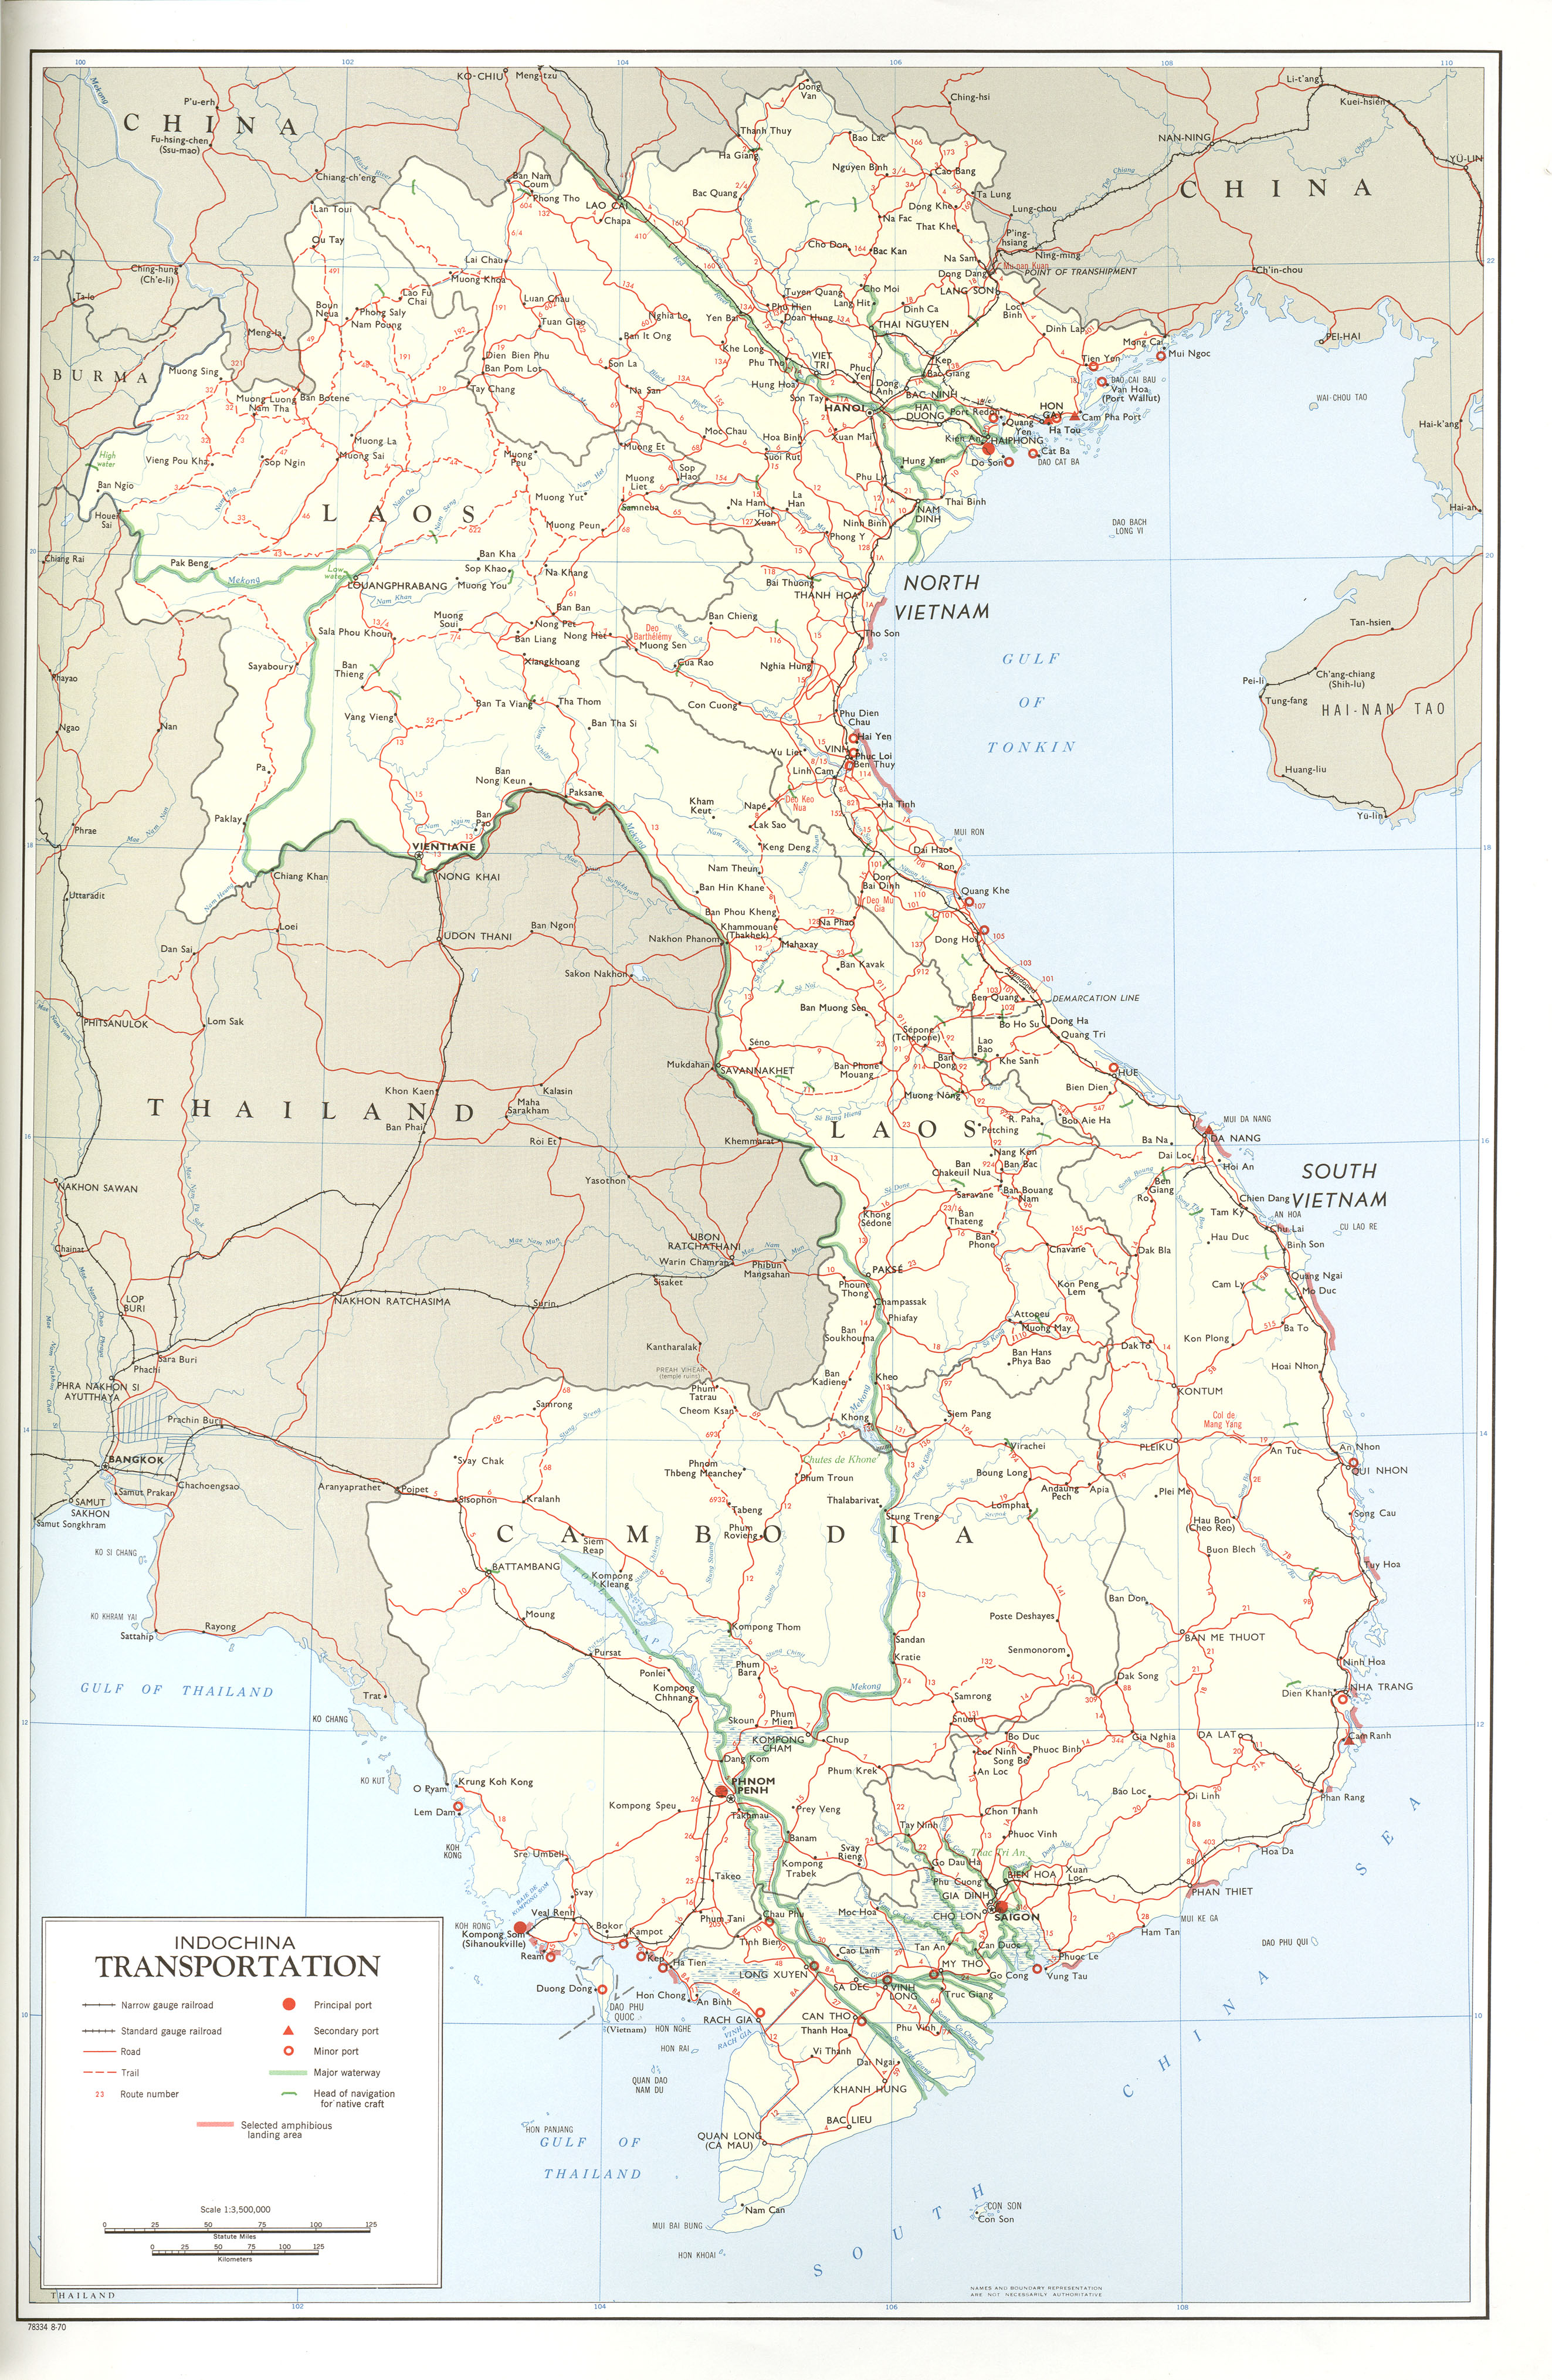 Mapa del Transporte en Indochina